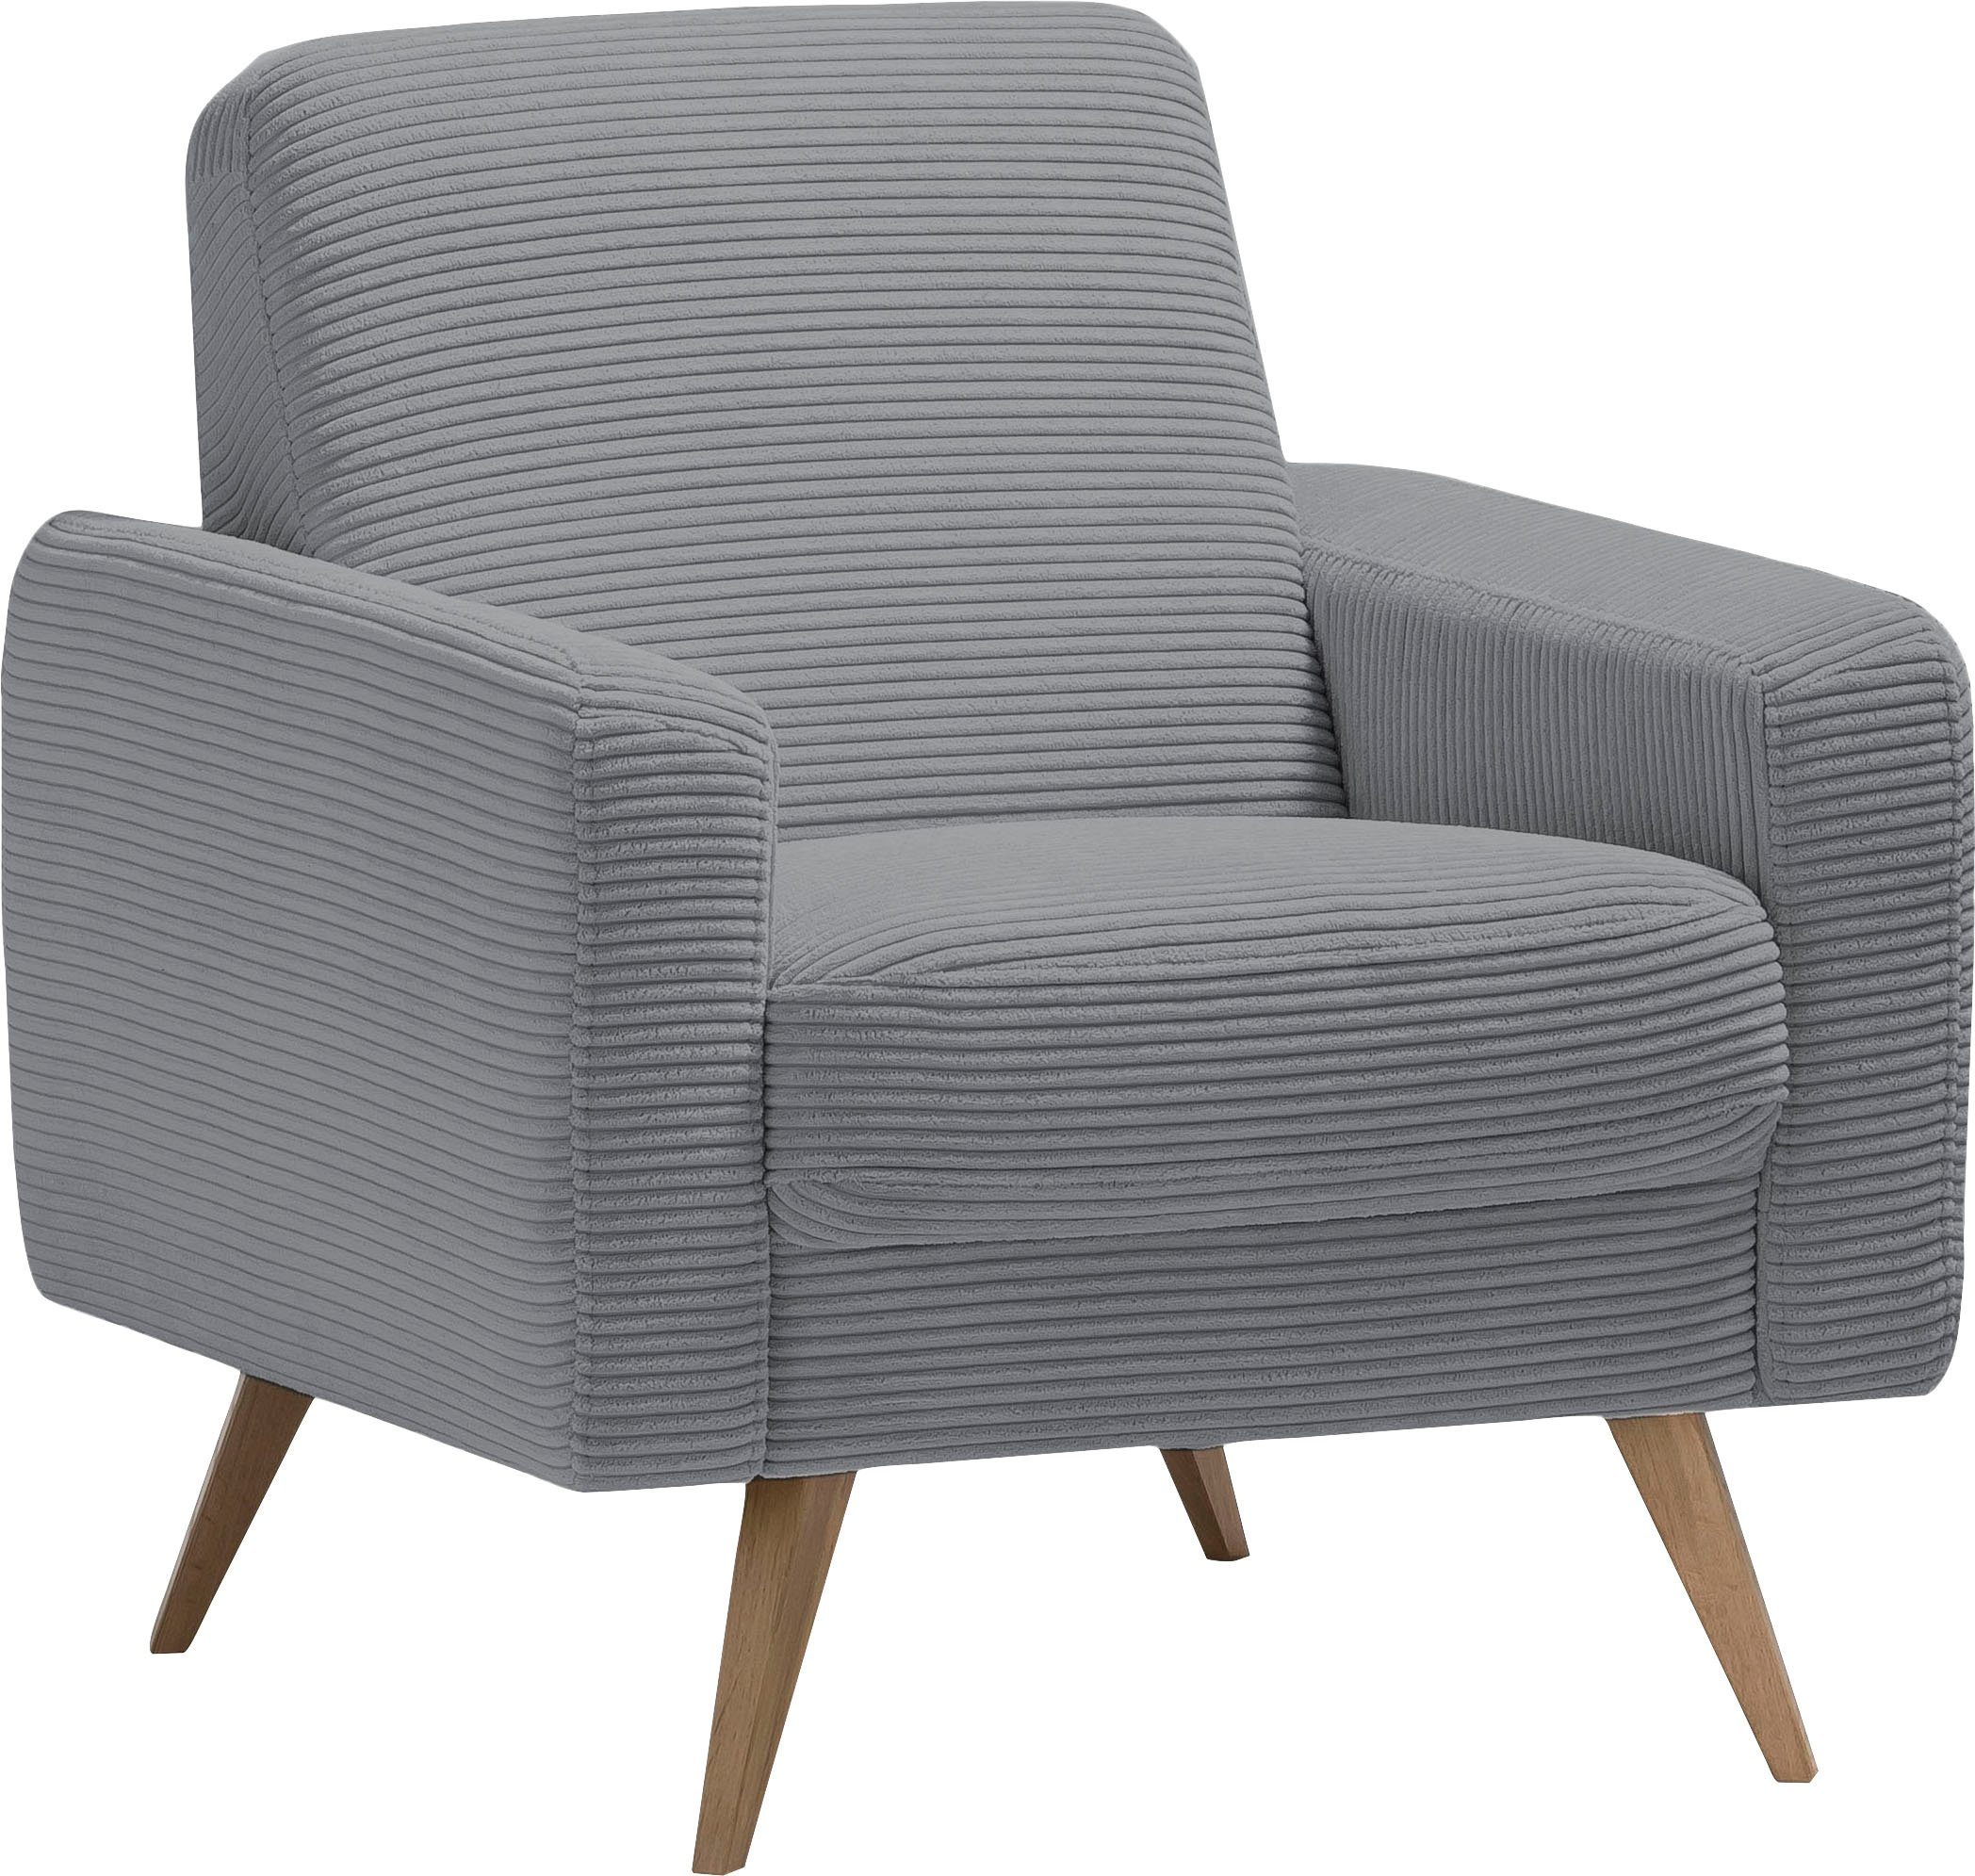 Samso fashion sofa grey - Sessel exxpo